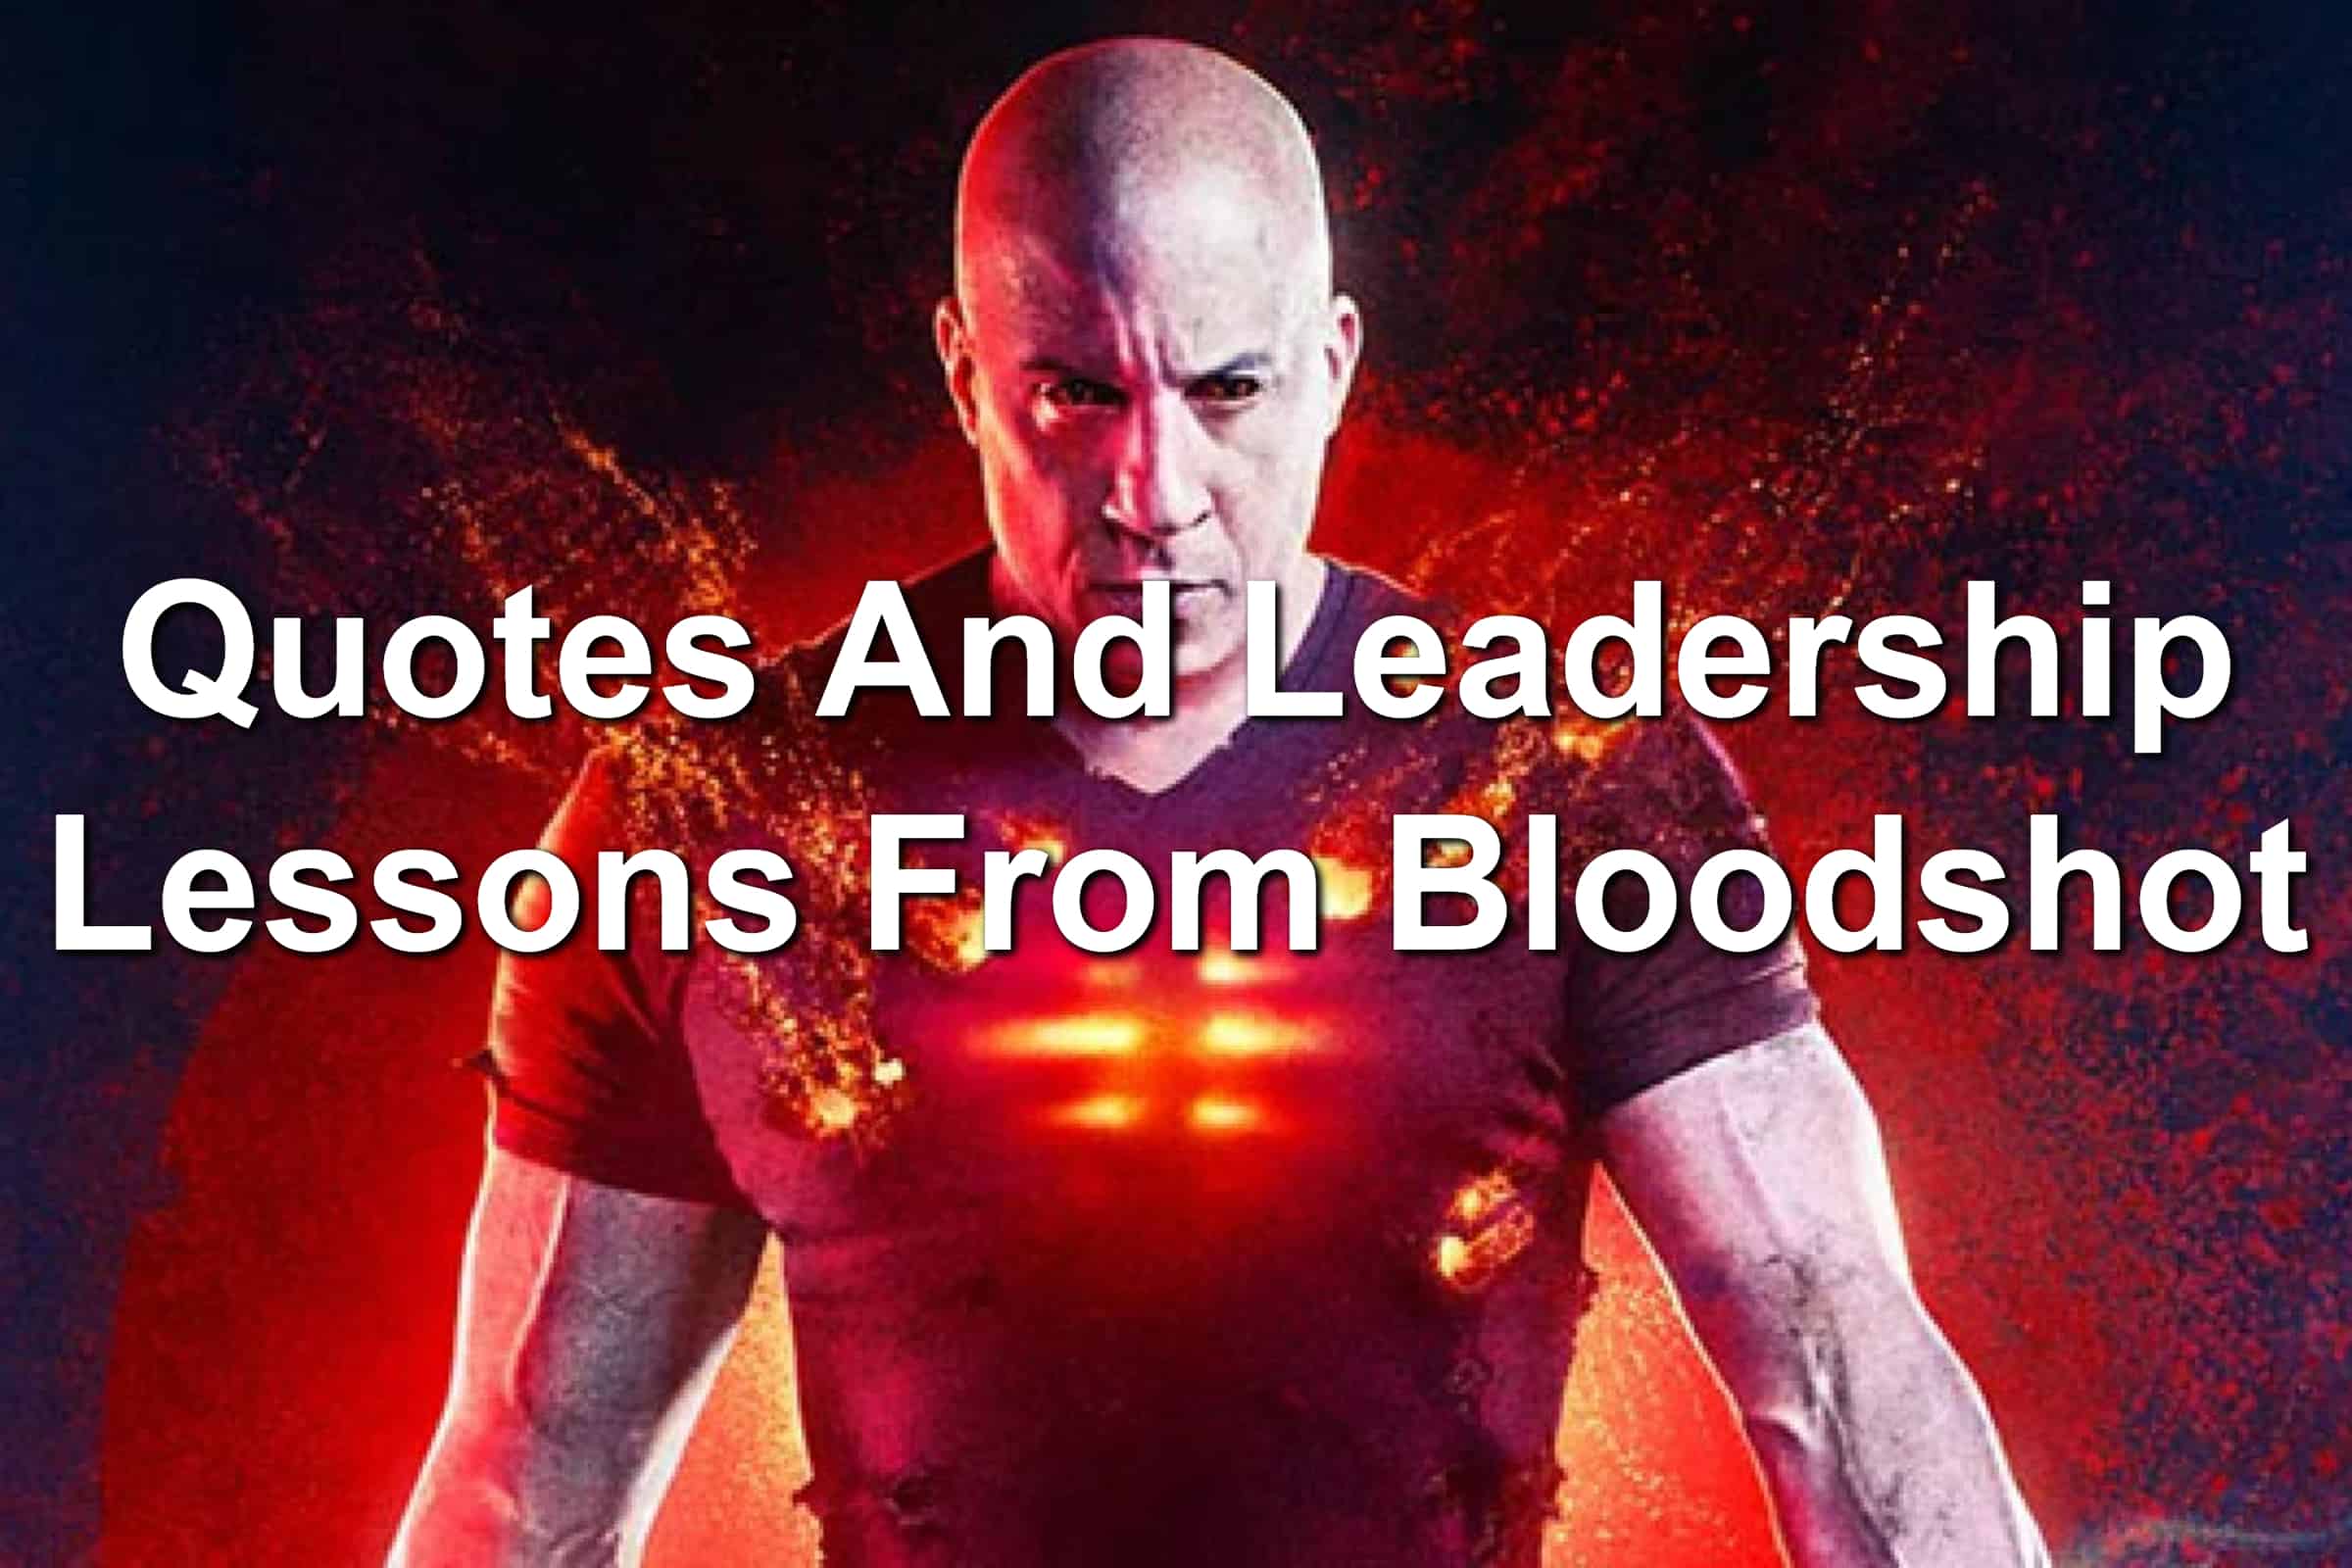 Vin Diesel in Valiant Comic's Bloodshot movie